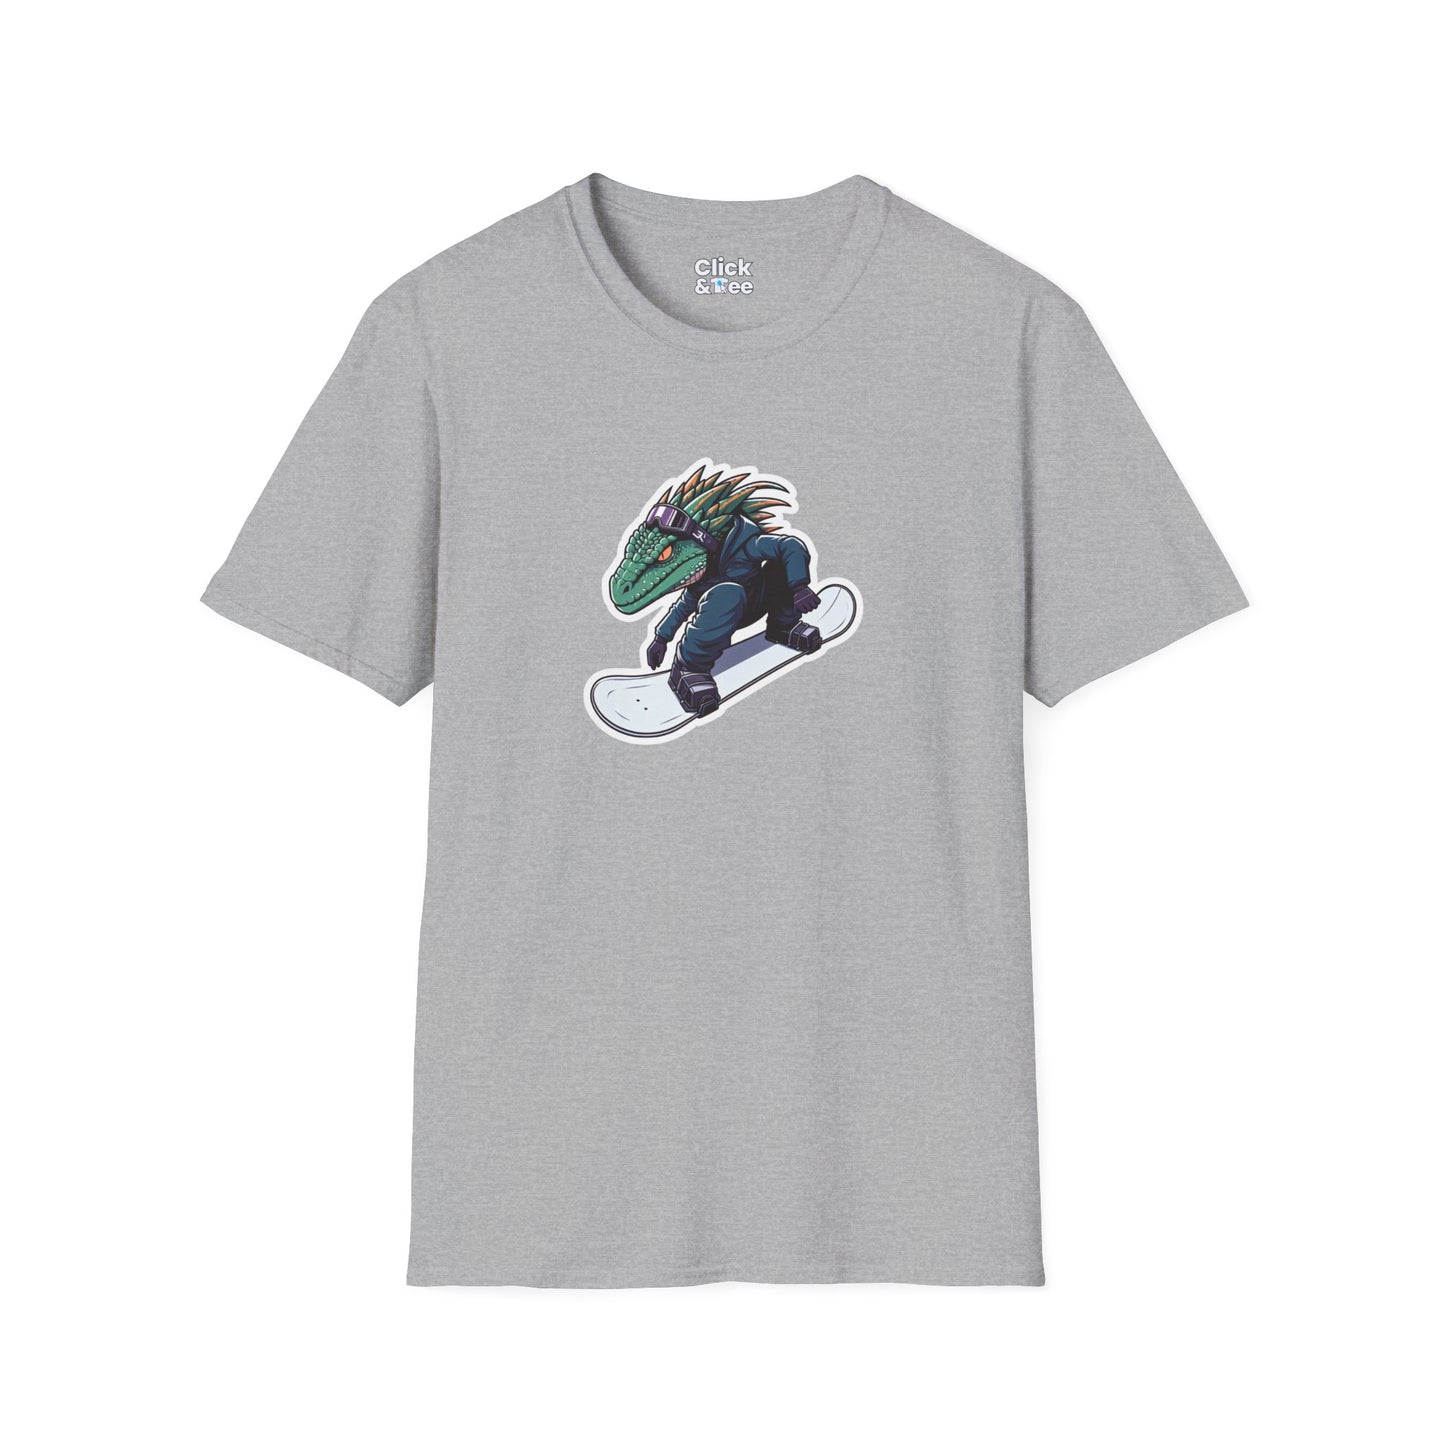 Unique T-Shirt - Heroic Lizard Snowboarder Flying through the air - Shonen Anime Style T-Shirt